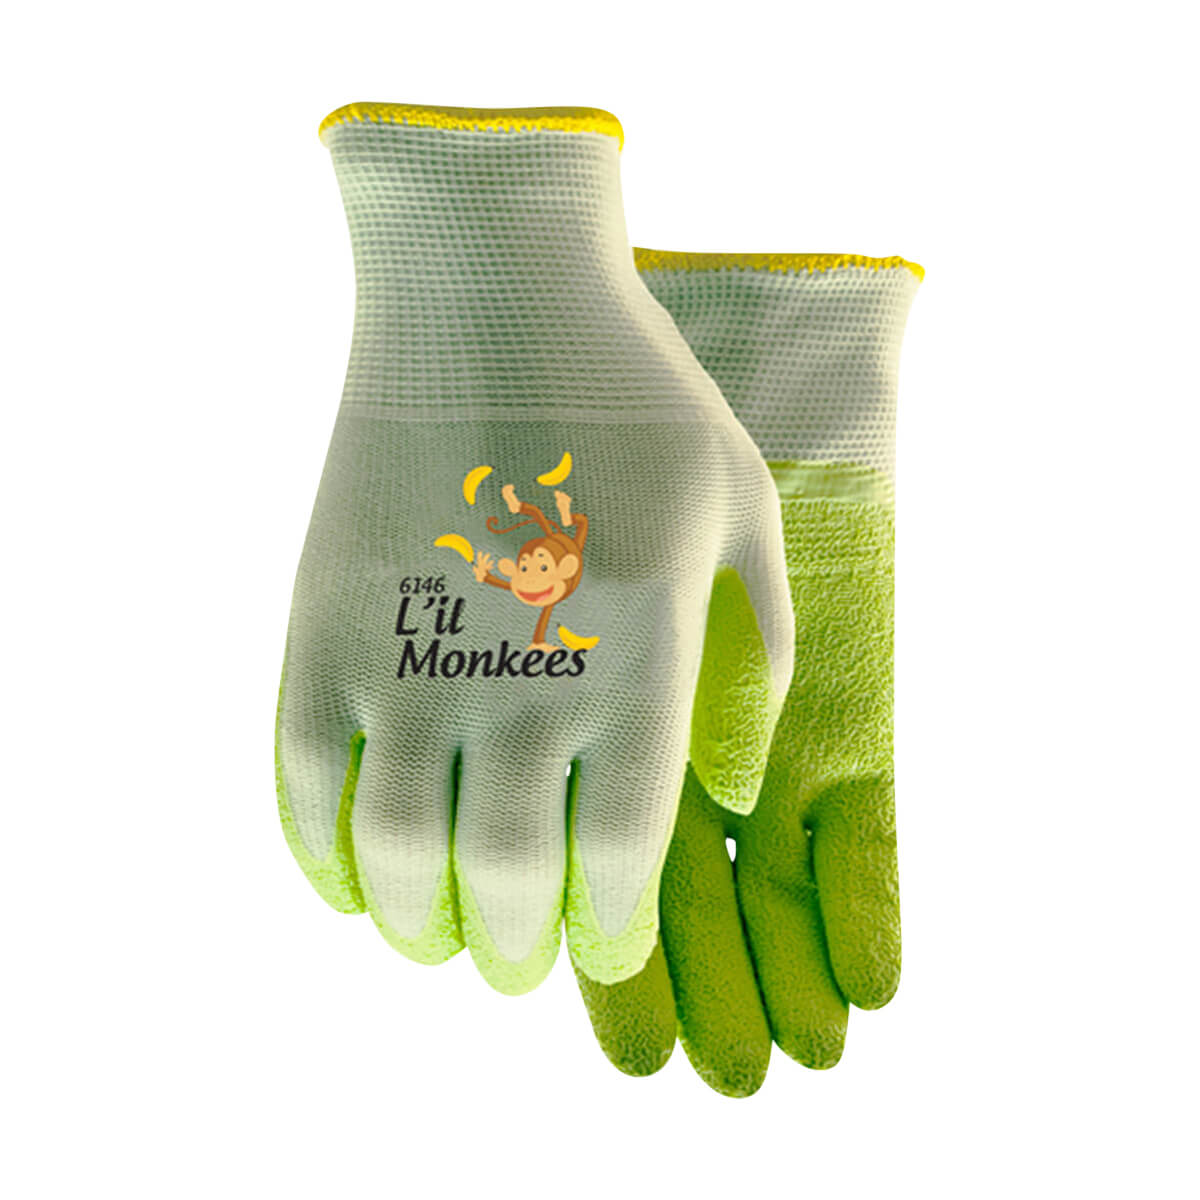 L'il Monkees Gloves